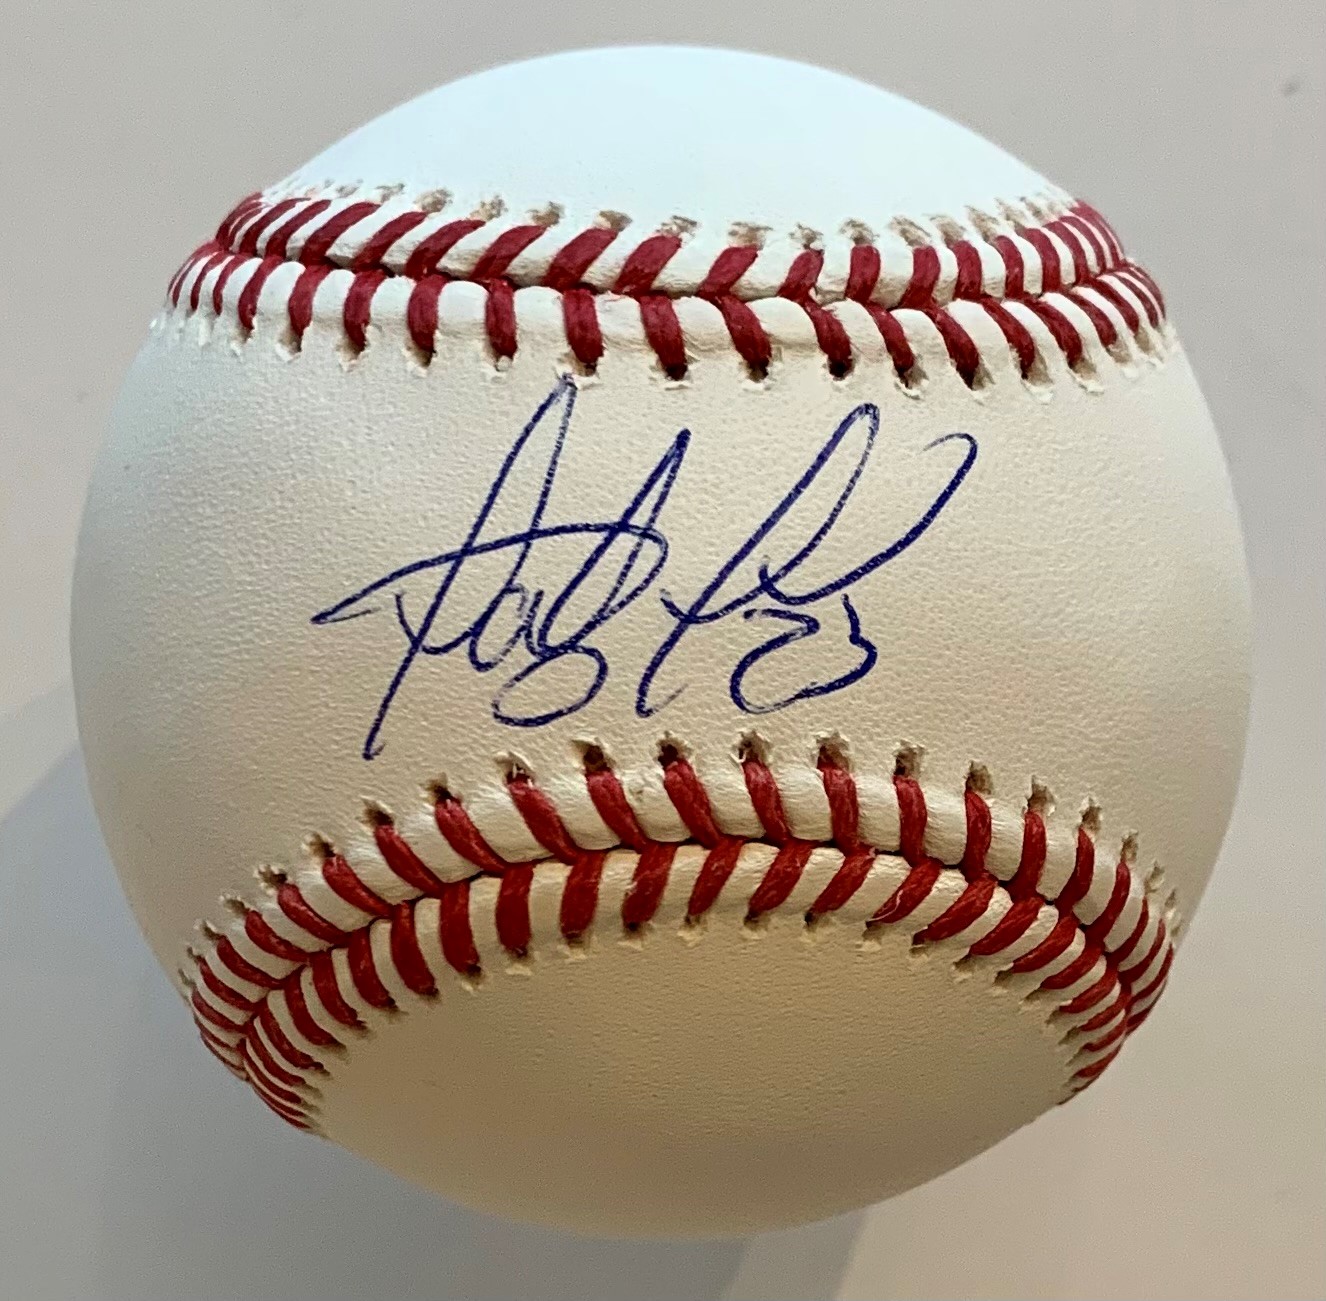 Fernando Tatis Jr. Signed Baseball [Padres]